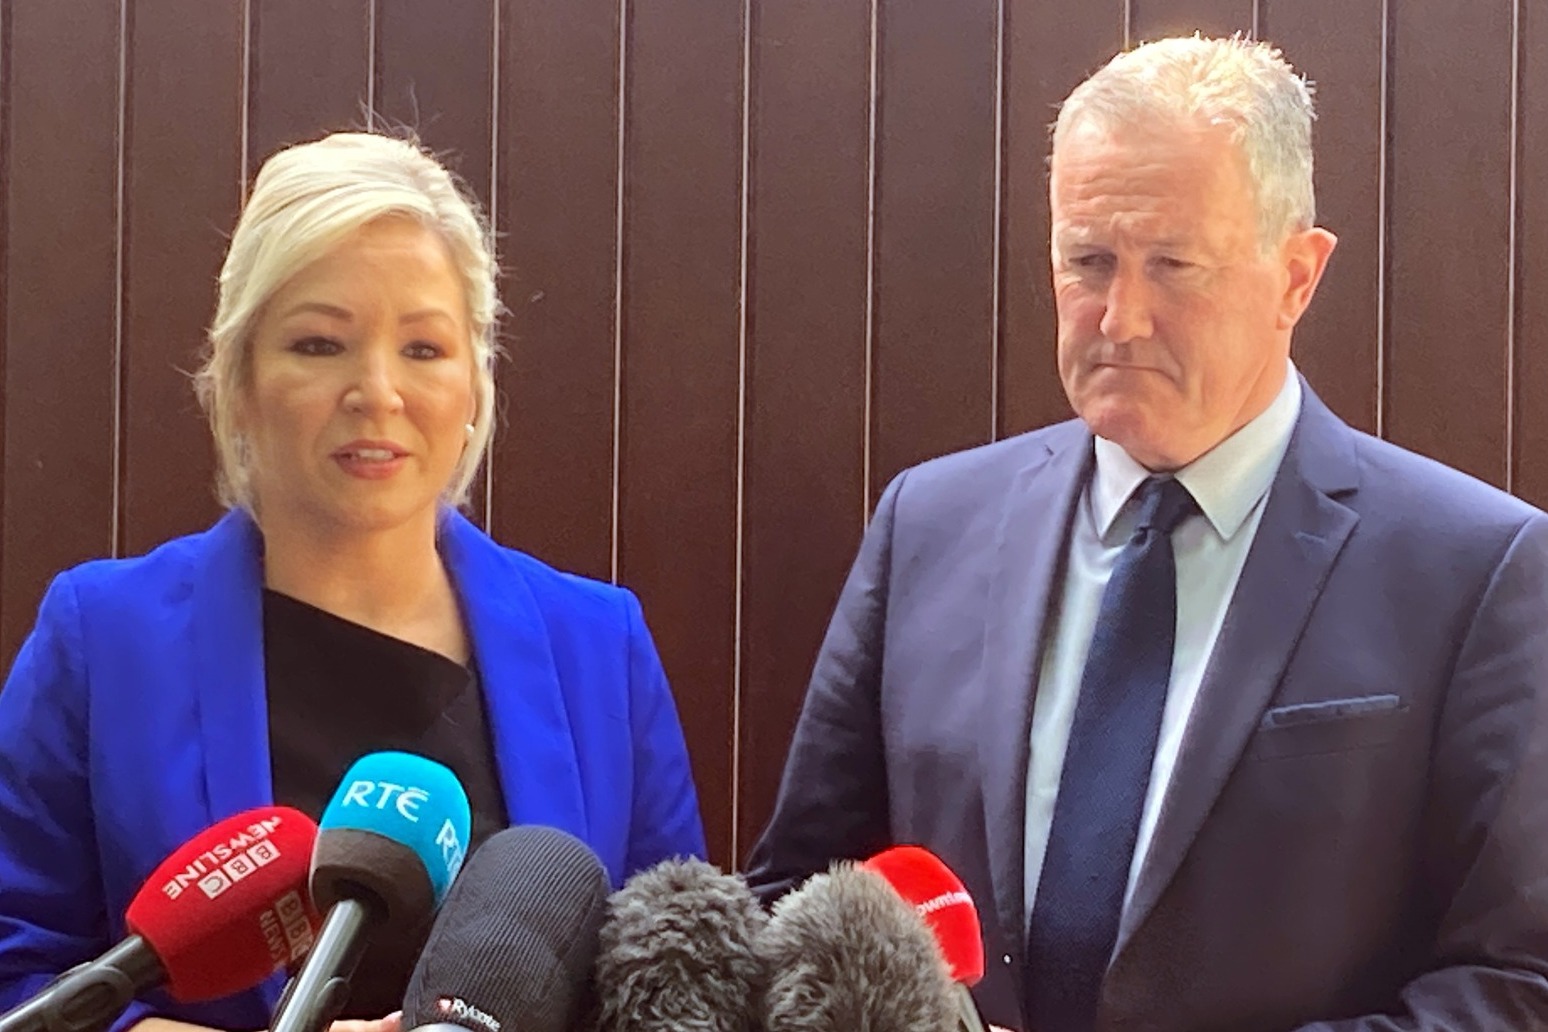 ‘Unacceptable’ for DUP to consider blocking Speaker election – Sinn Fein 